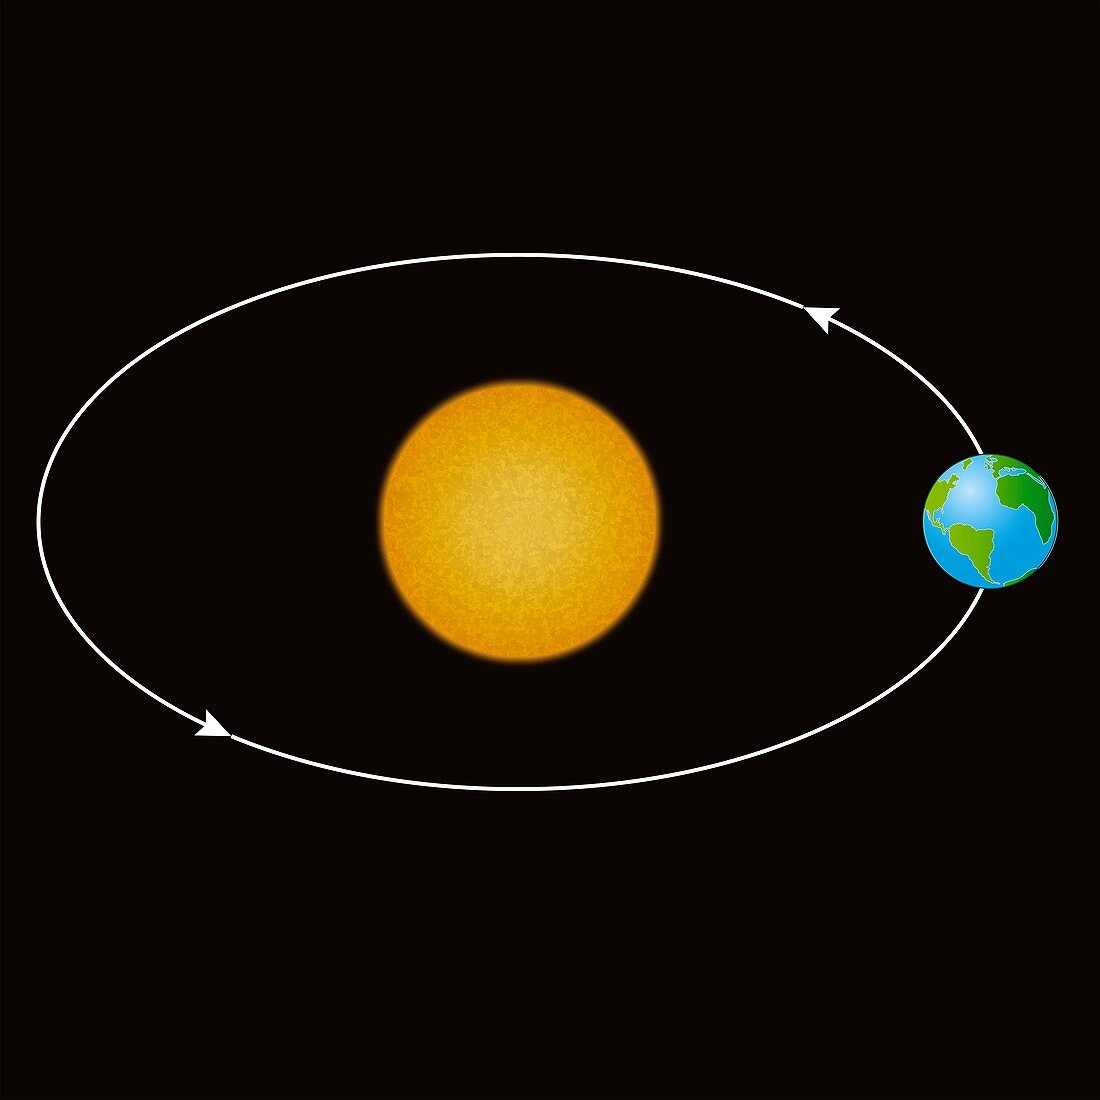 Earth orbiting the Sun, illustration